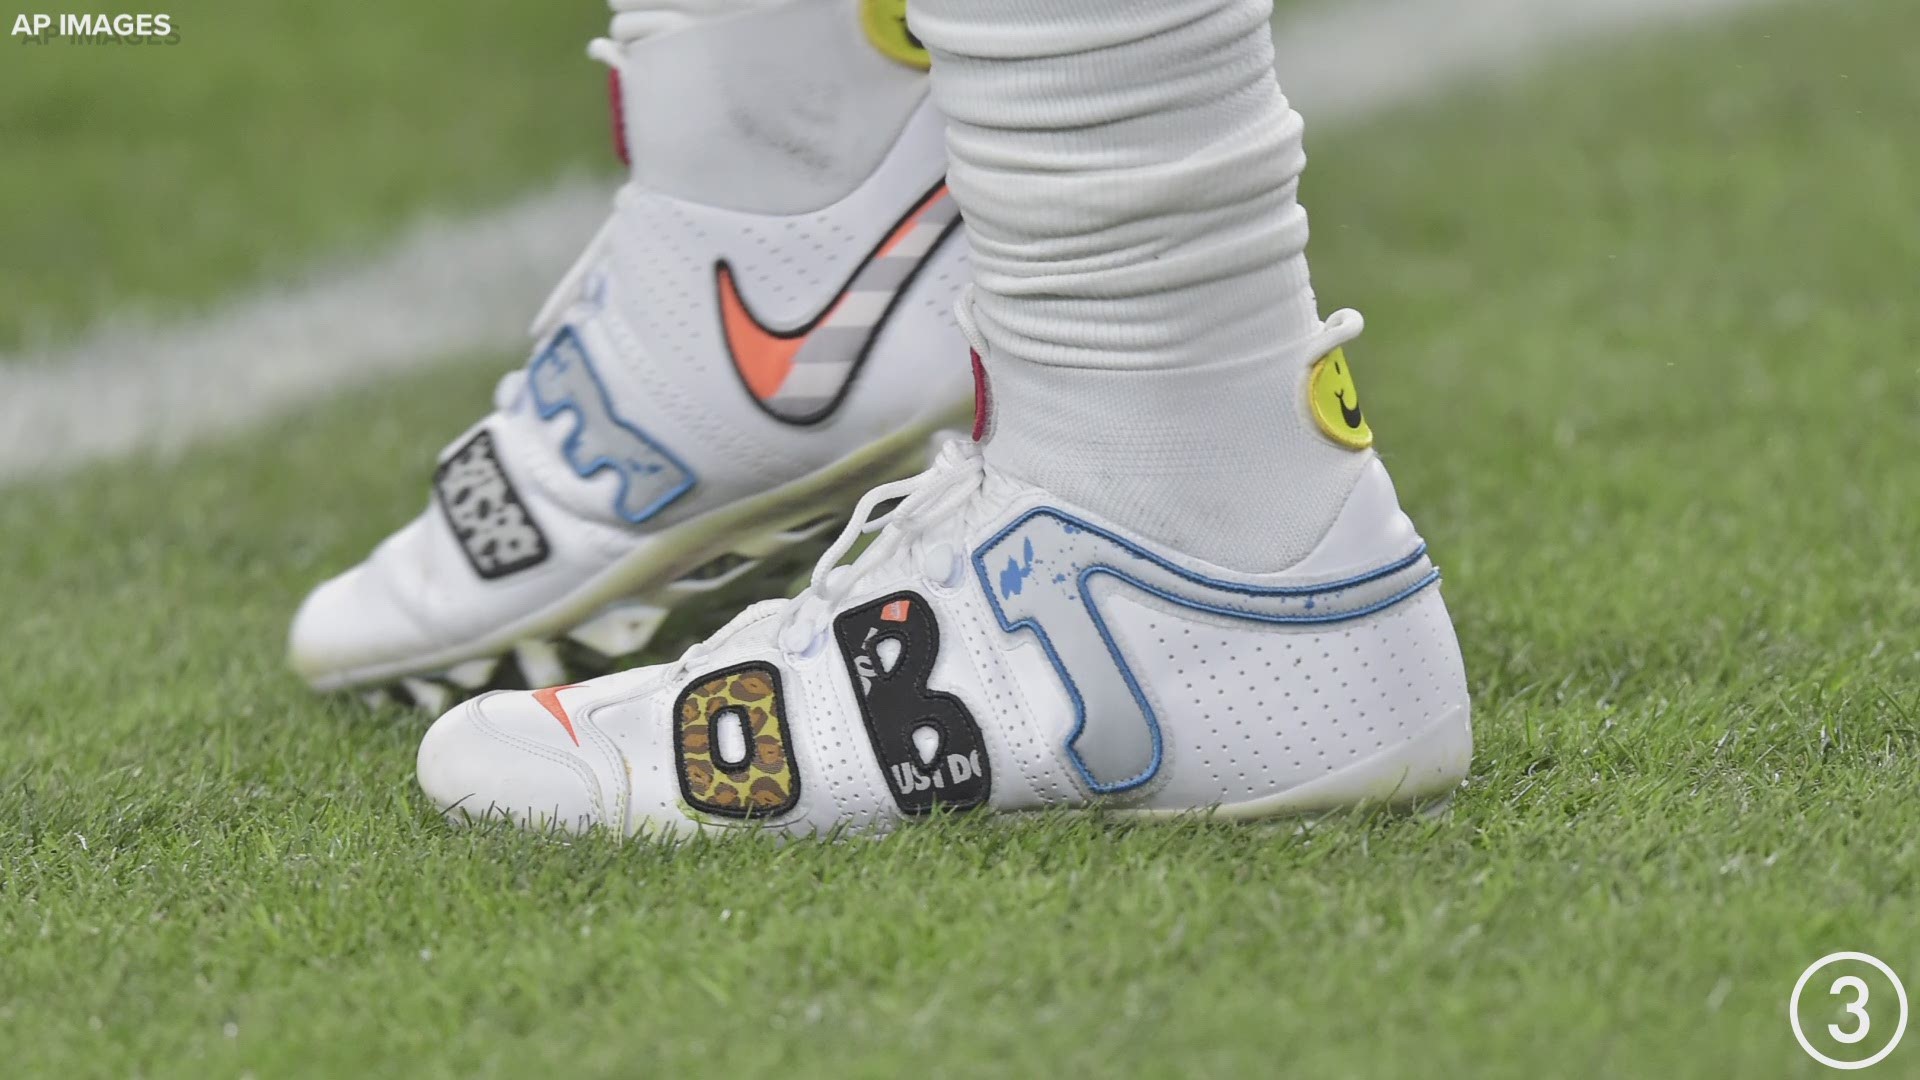 Odell Beckham Jr.'s new Nike cleat 